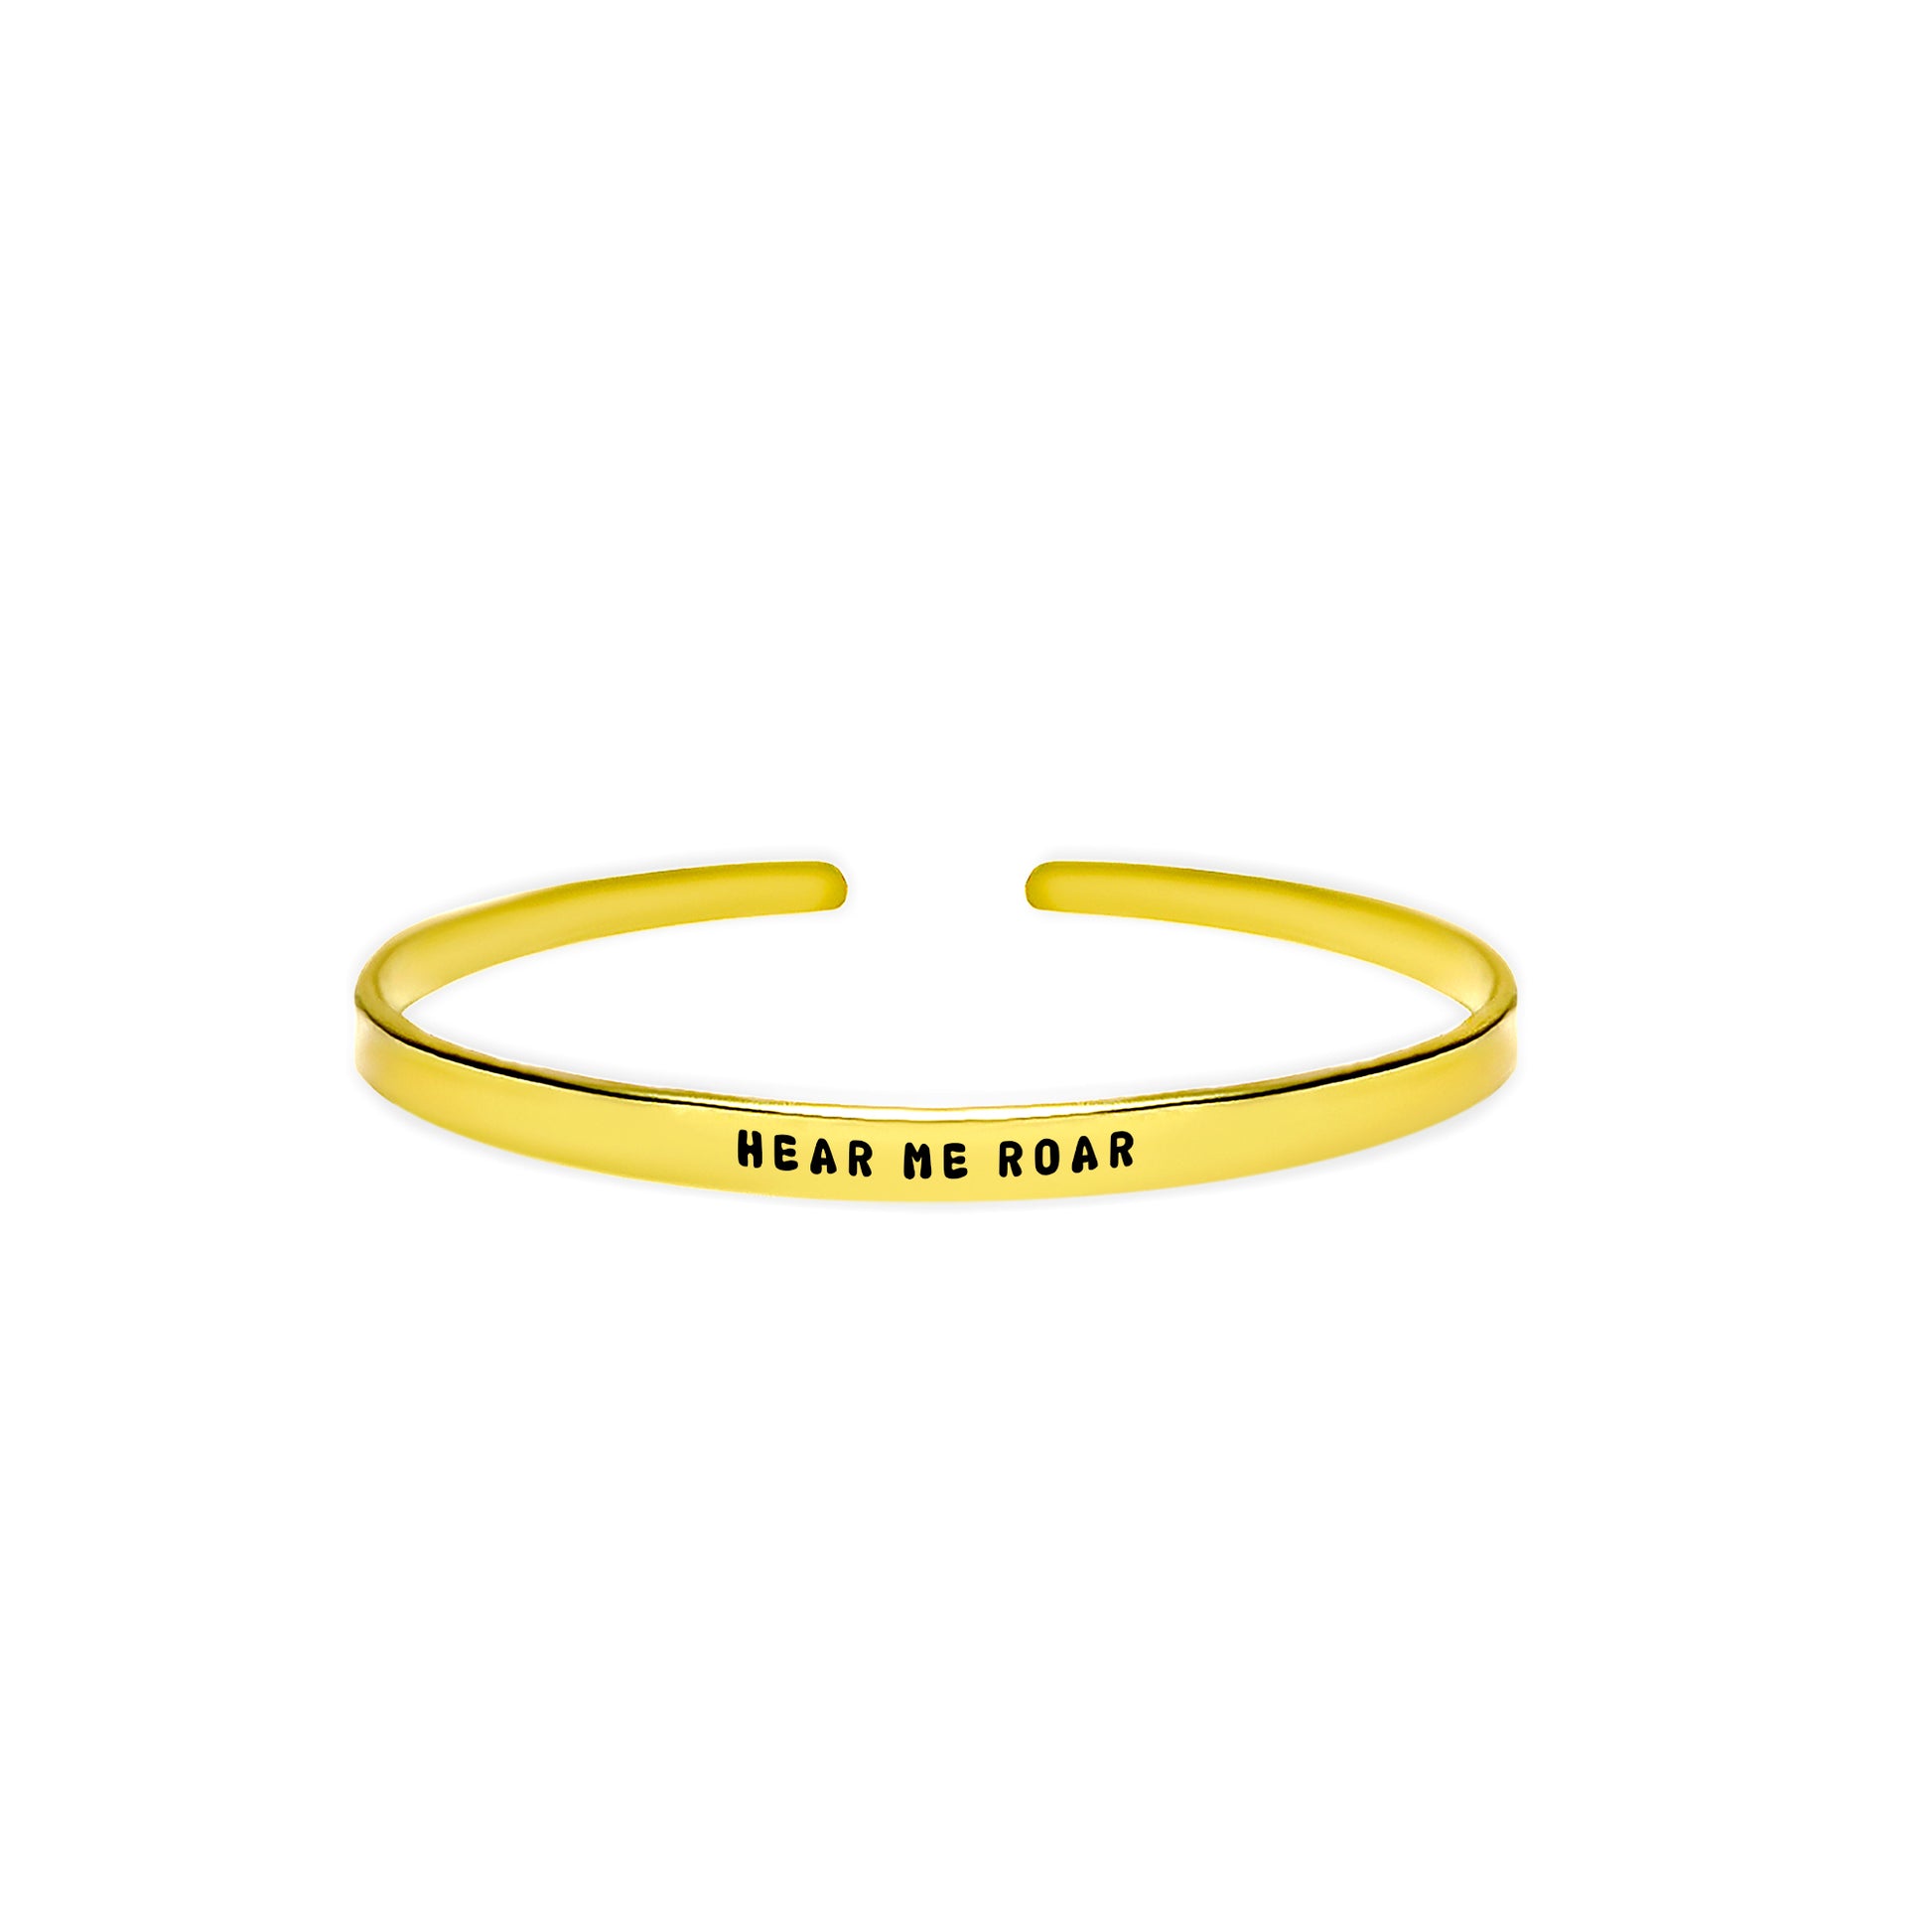 ‘Hear me roar’ empowering phrase USA dainty handmade cuff bracelet 